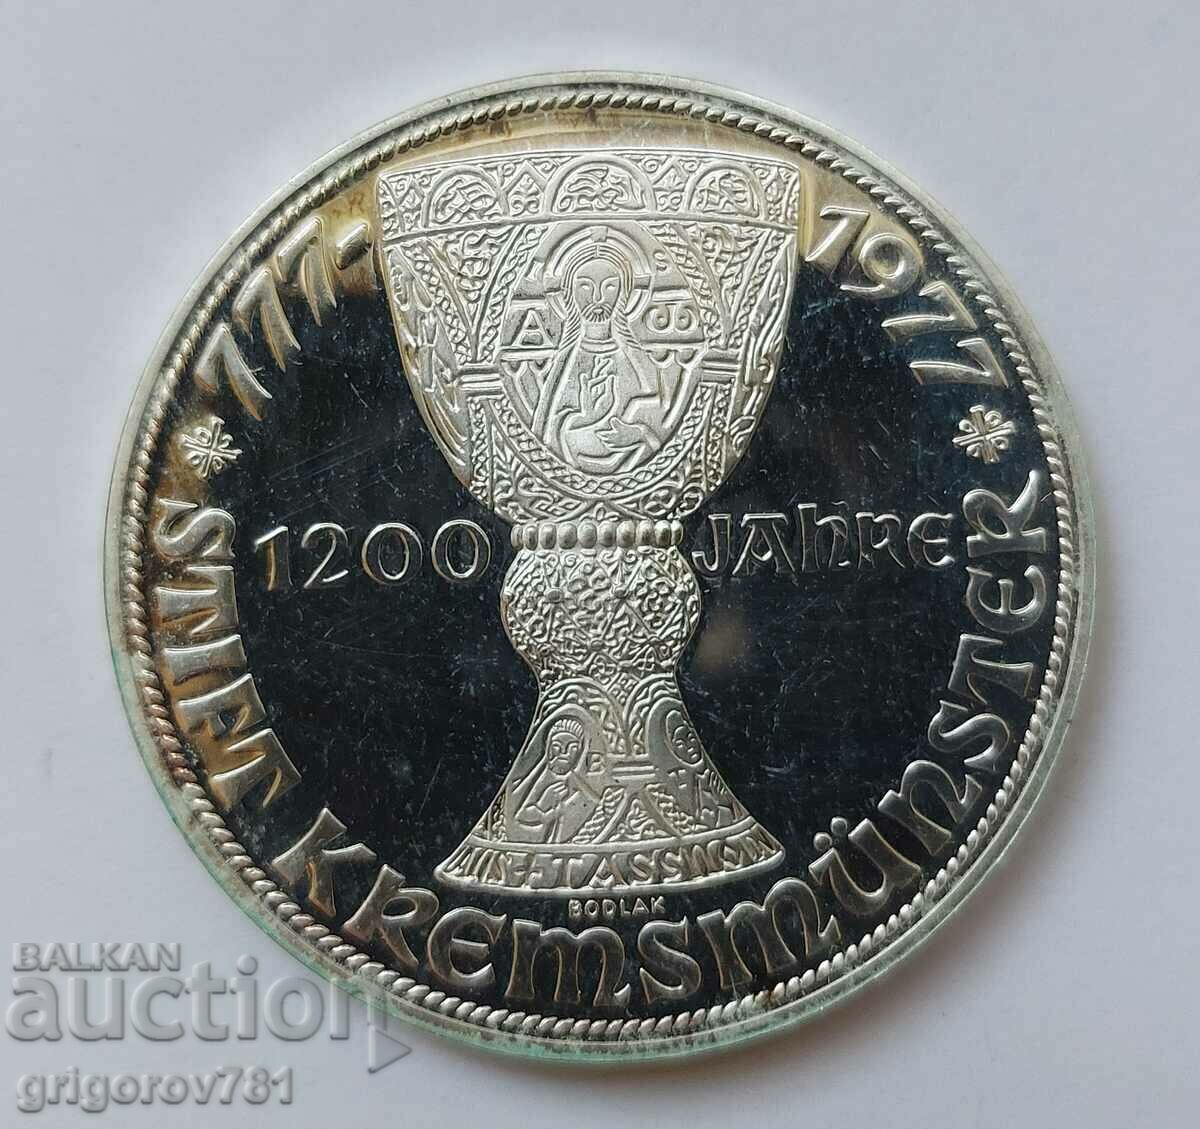 100 Shillings Silver Proof Αυστρία 1977 - Ασημένιο νόμισμα #9